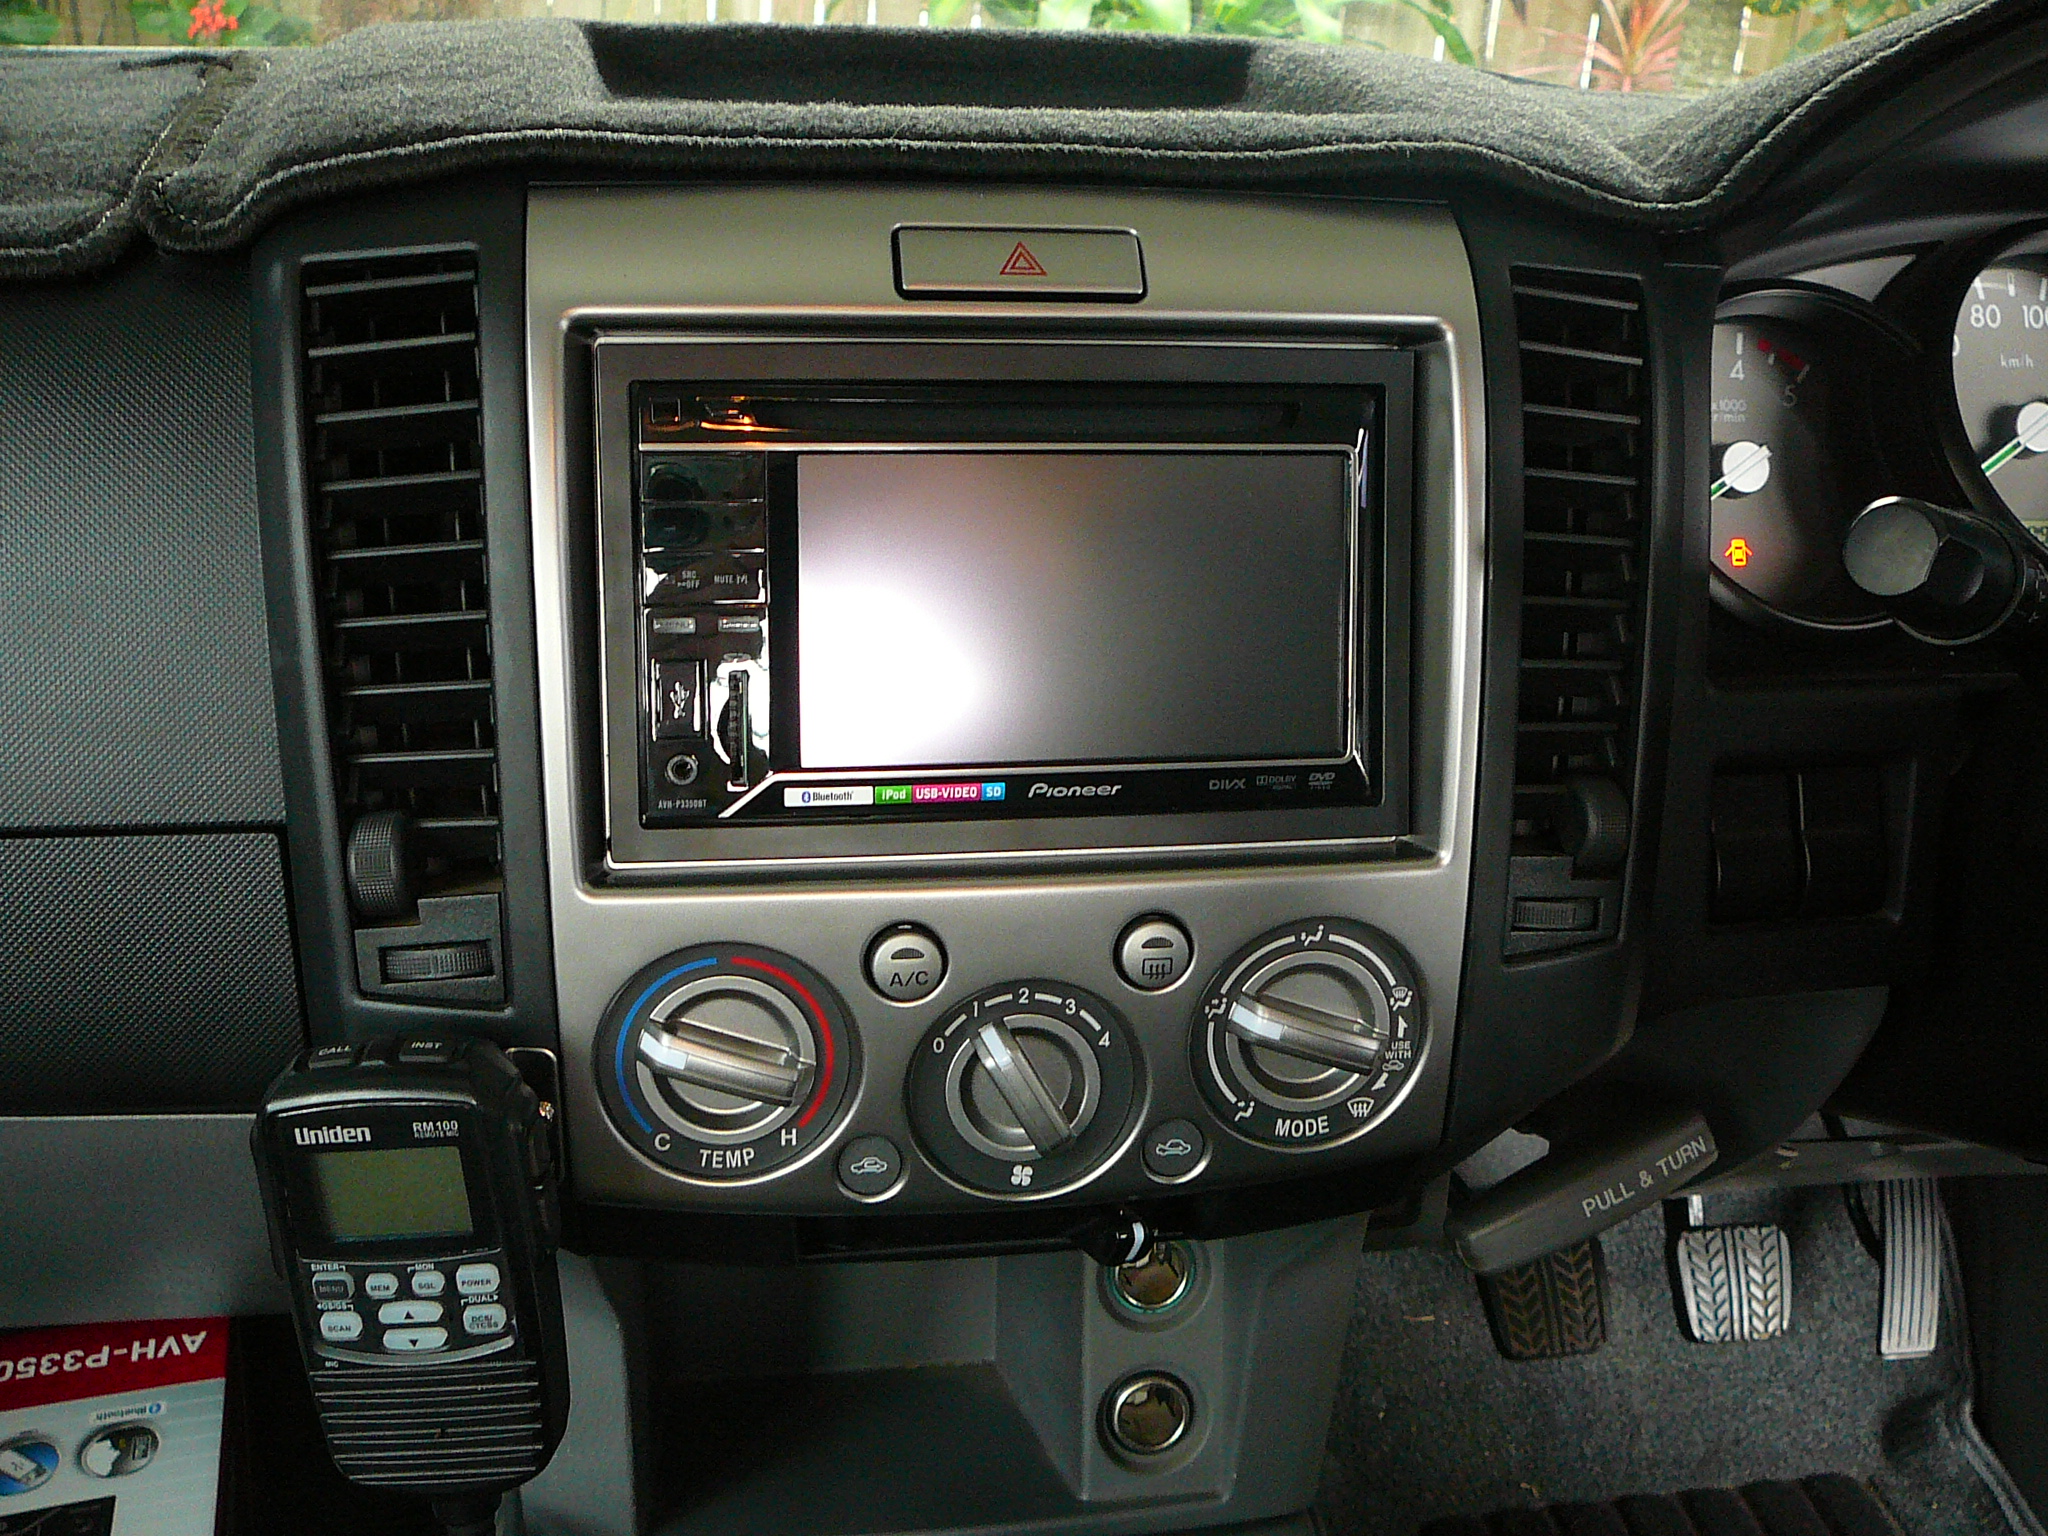 Mazda BT-50, Pioneer DVD Cd radio with reverse